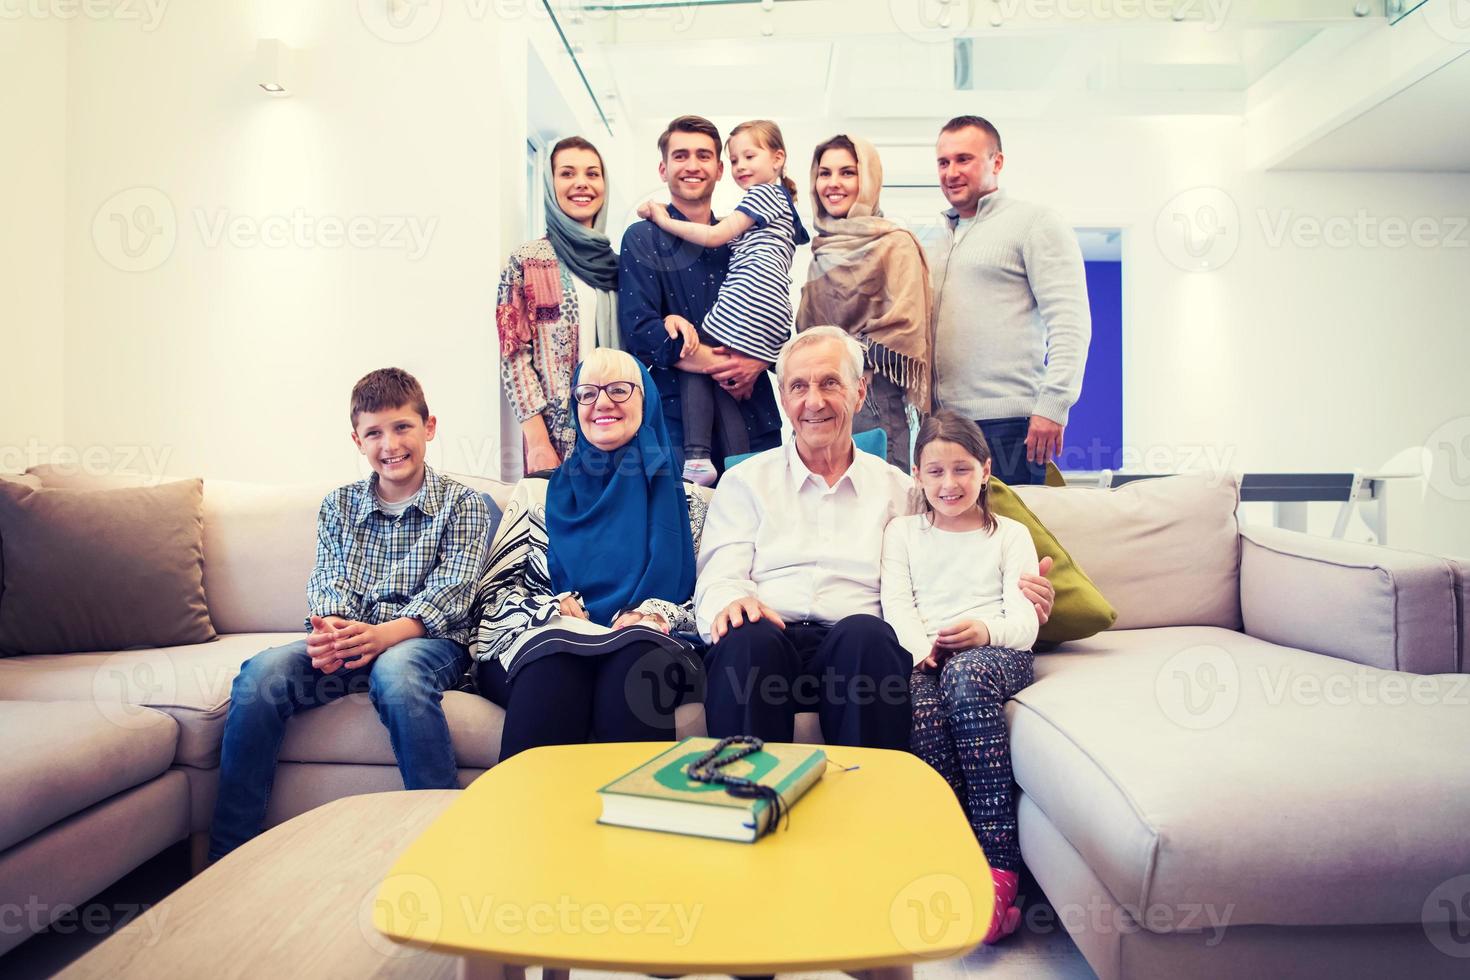 retrato de família muçulmana moderna feliz foto